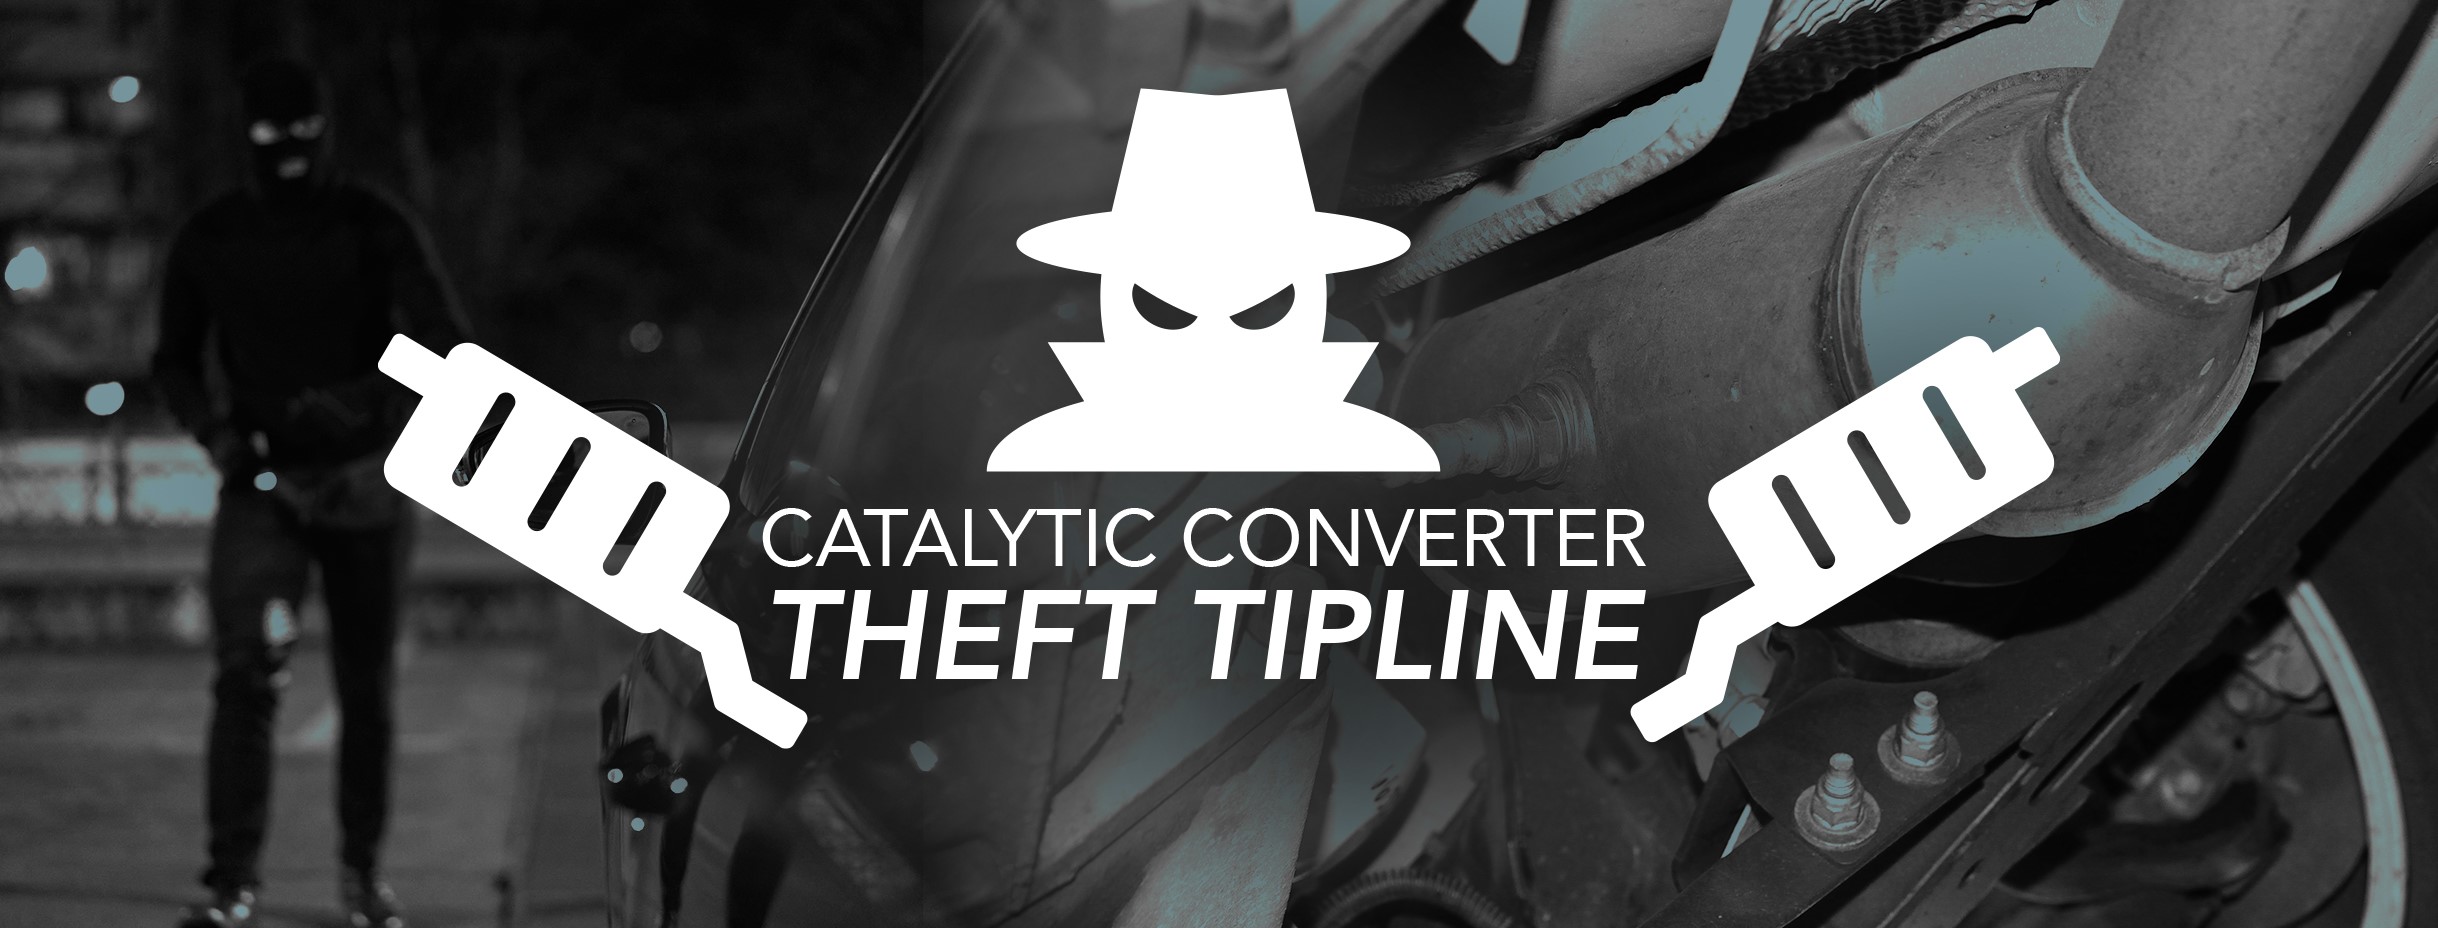 Catalytic Converter Theft Tip Line Banner